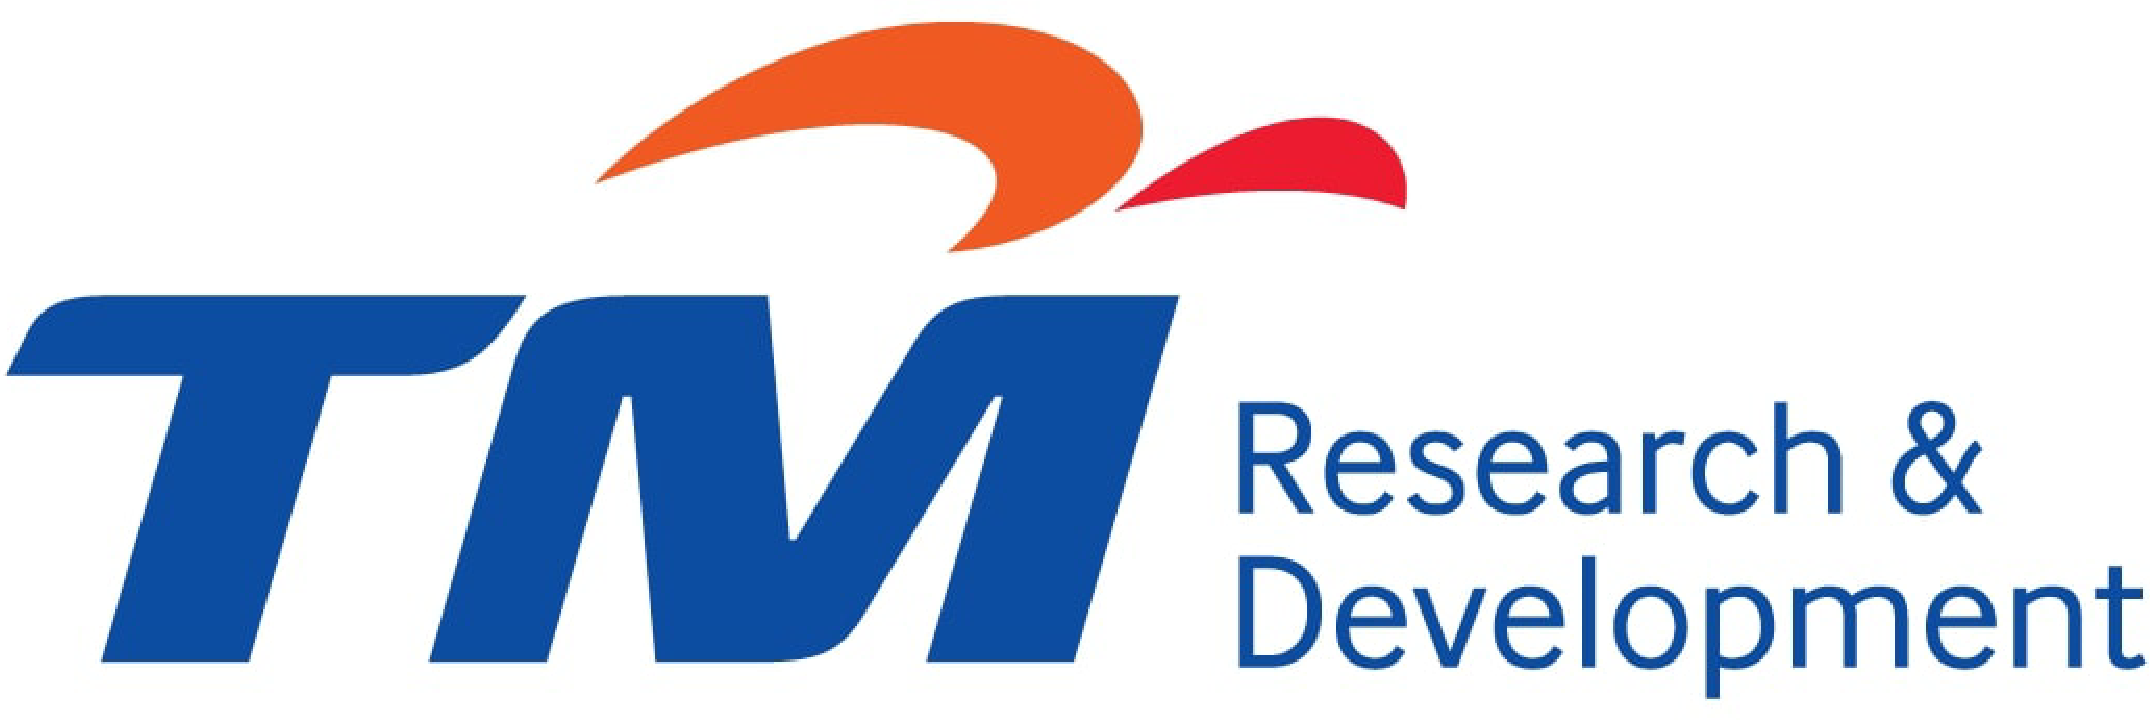 Telekom R&D Malaysia logo